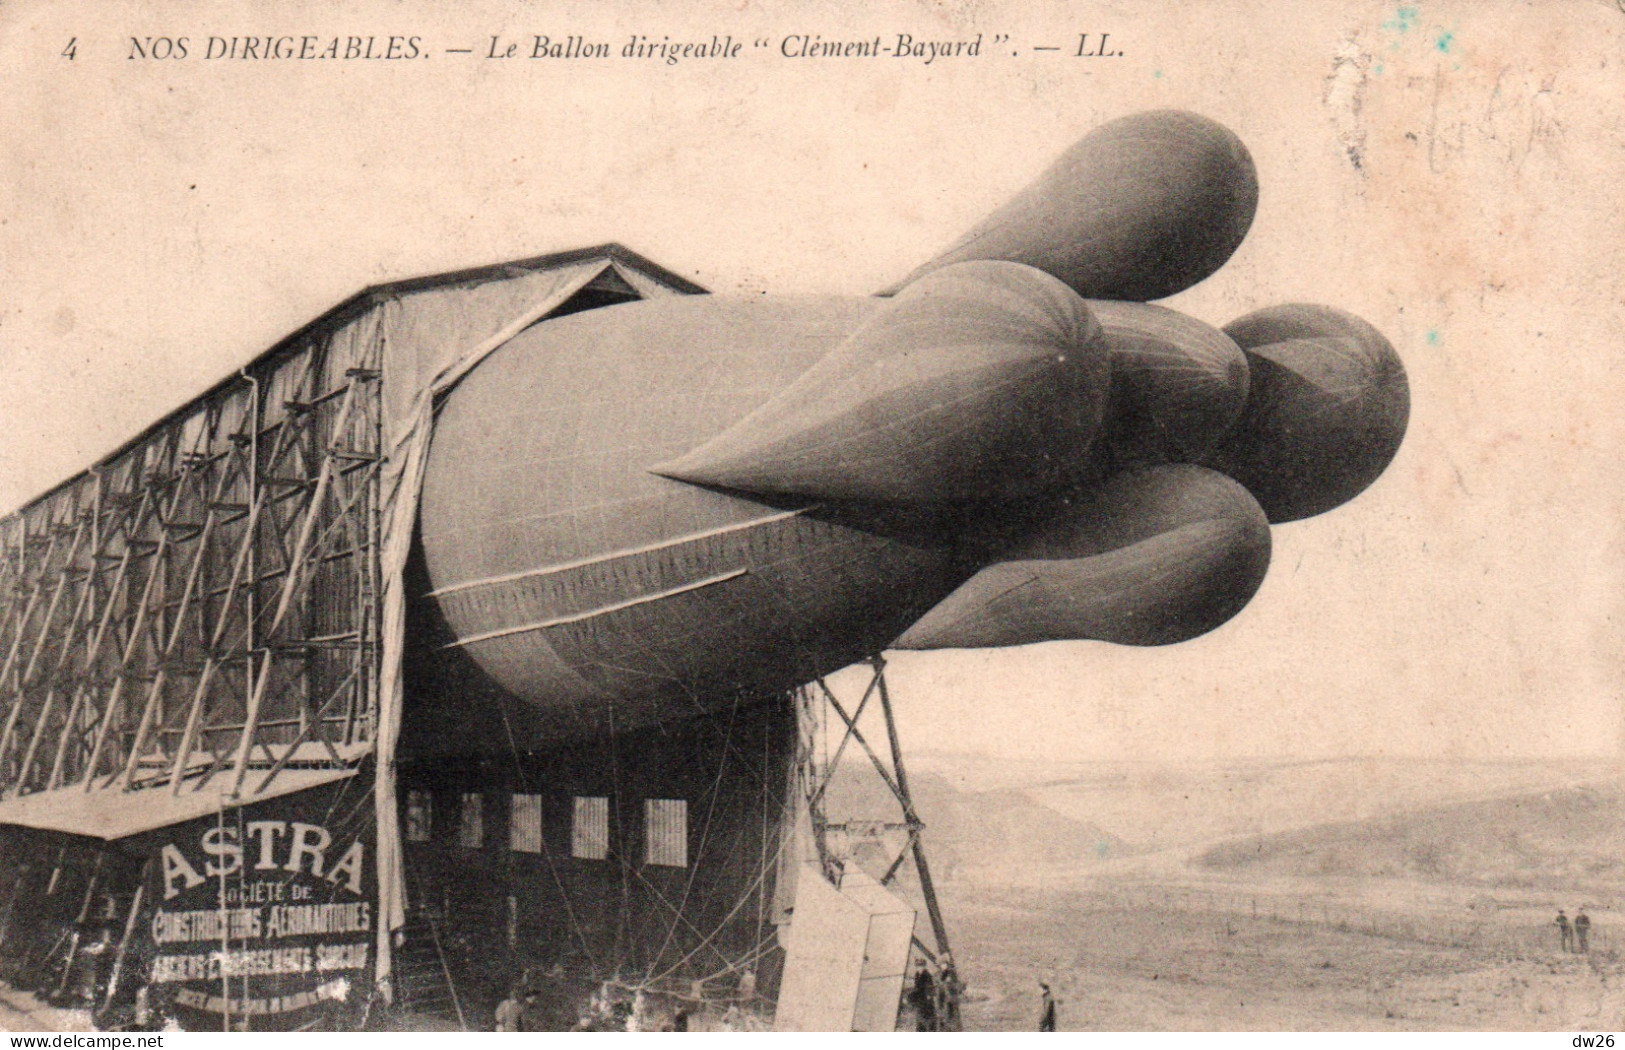 Nos Dirigeables: Le Ballon Dirigeable Clément-Bayard Sortant Du Hangar (Construction Société Astra) Carte LL N° 4 - Aeronaves